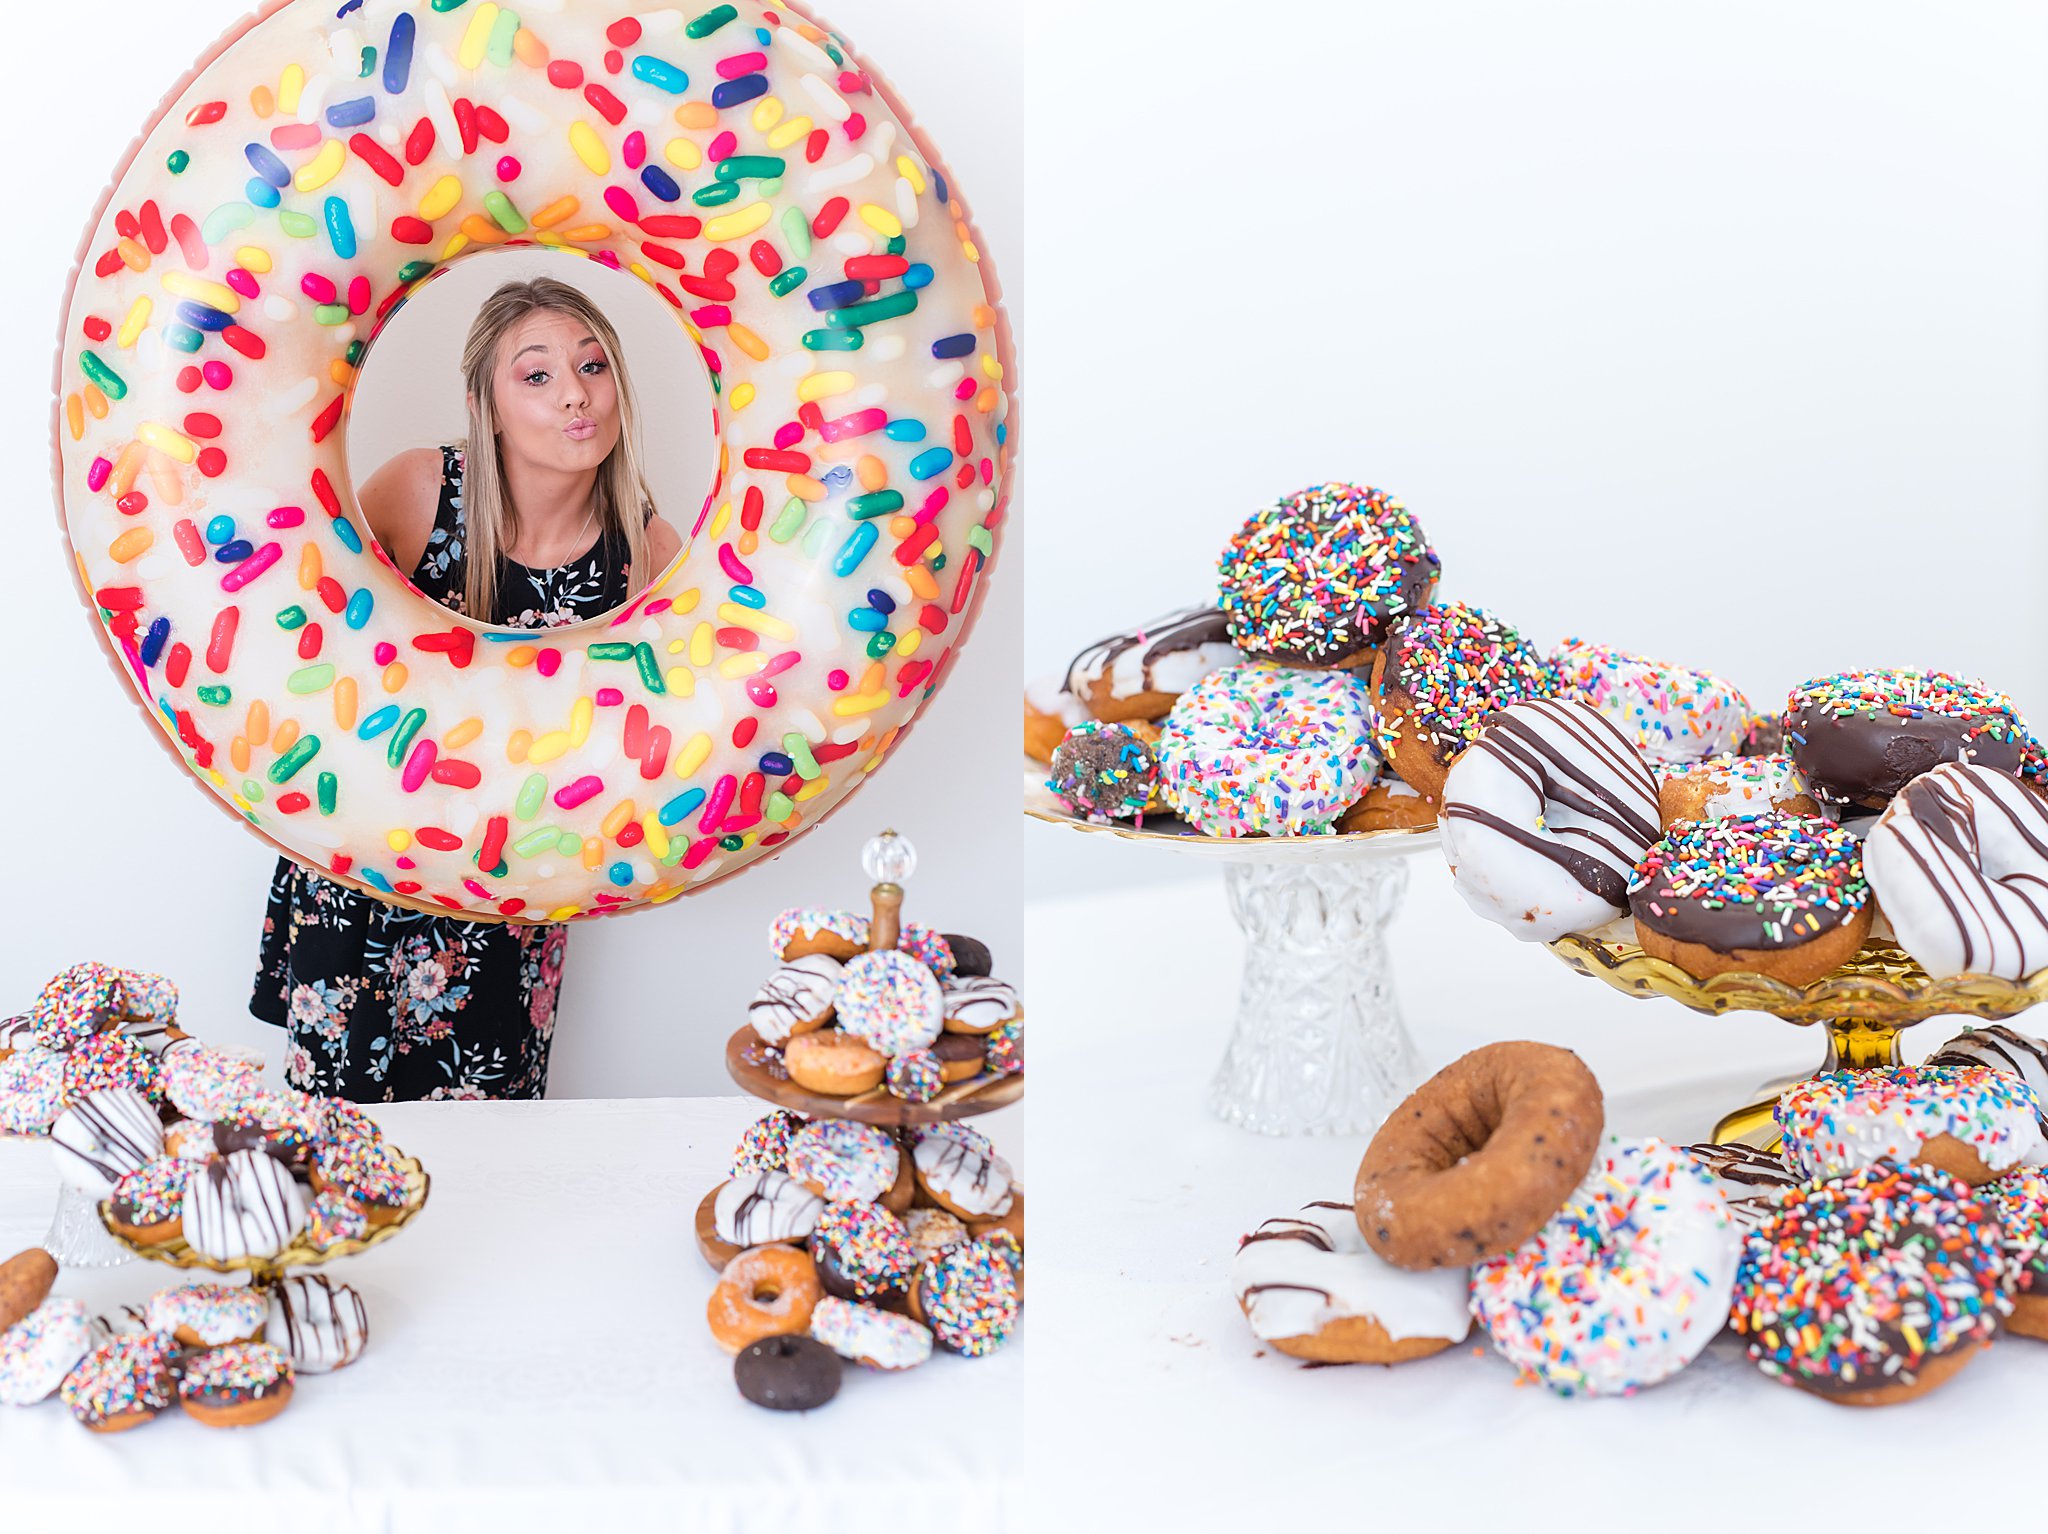 senior spokesmodel photos donuts